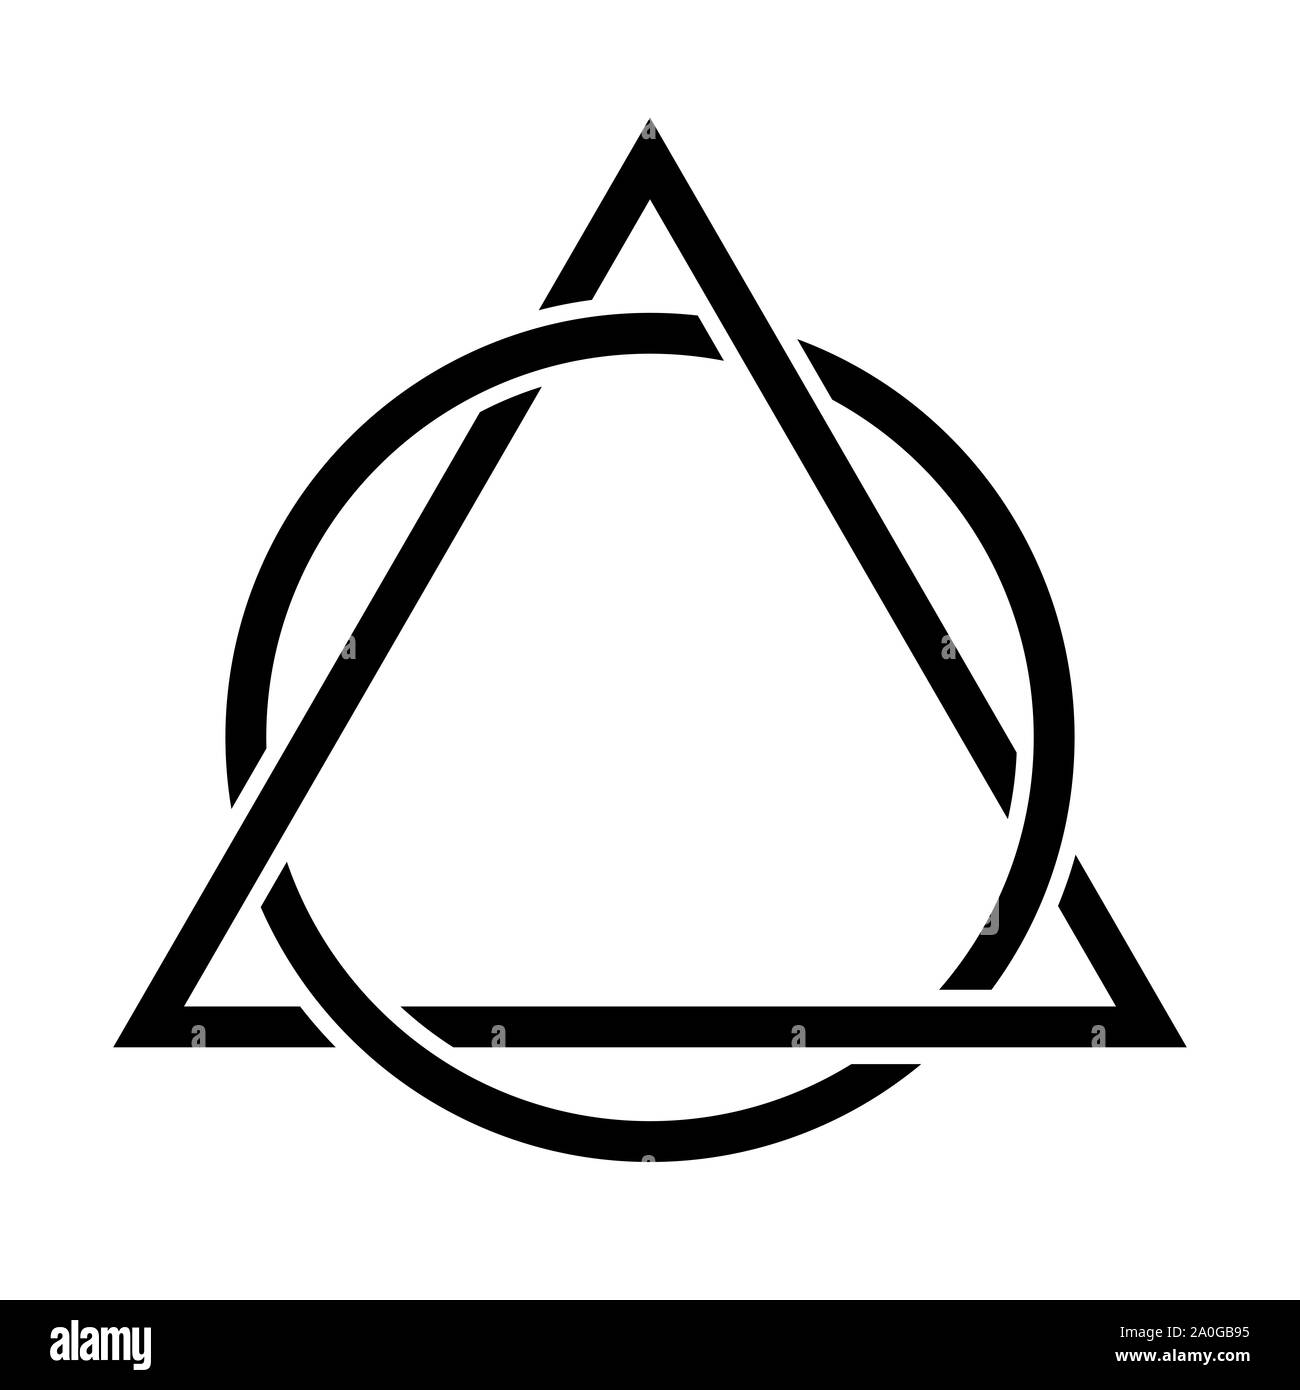 Circle triangle. Знак треугольник внутри круг. Символ треугольник в круге. Круг с треугольником внутри. Круг внутри треугольника символ.